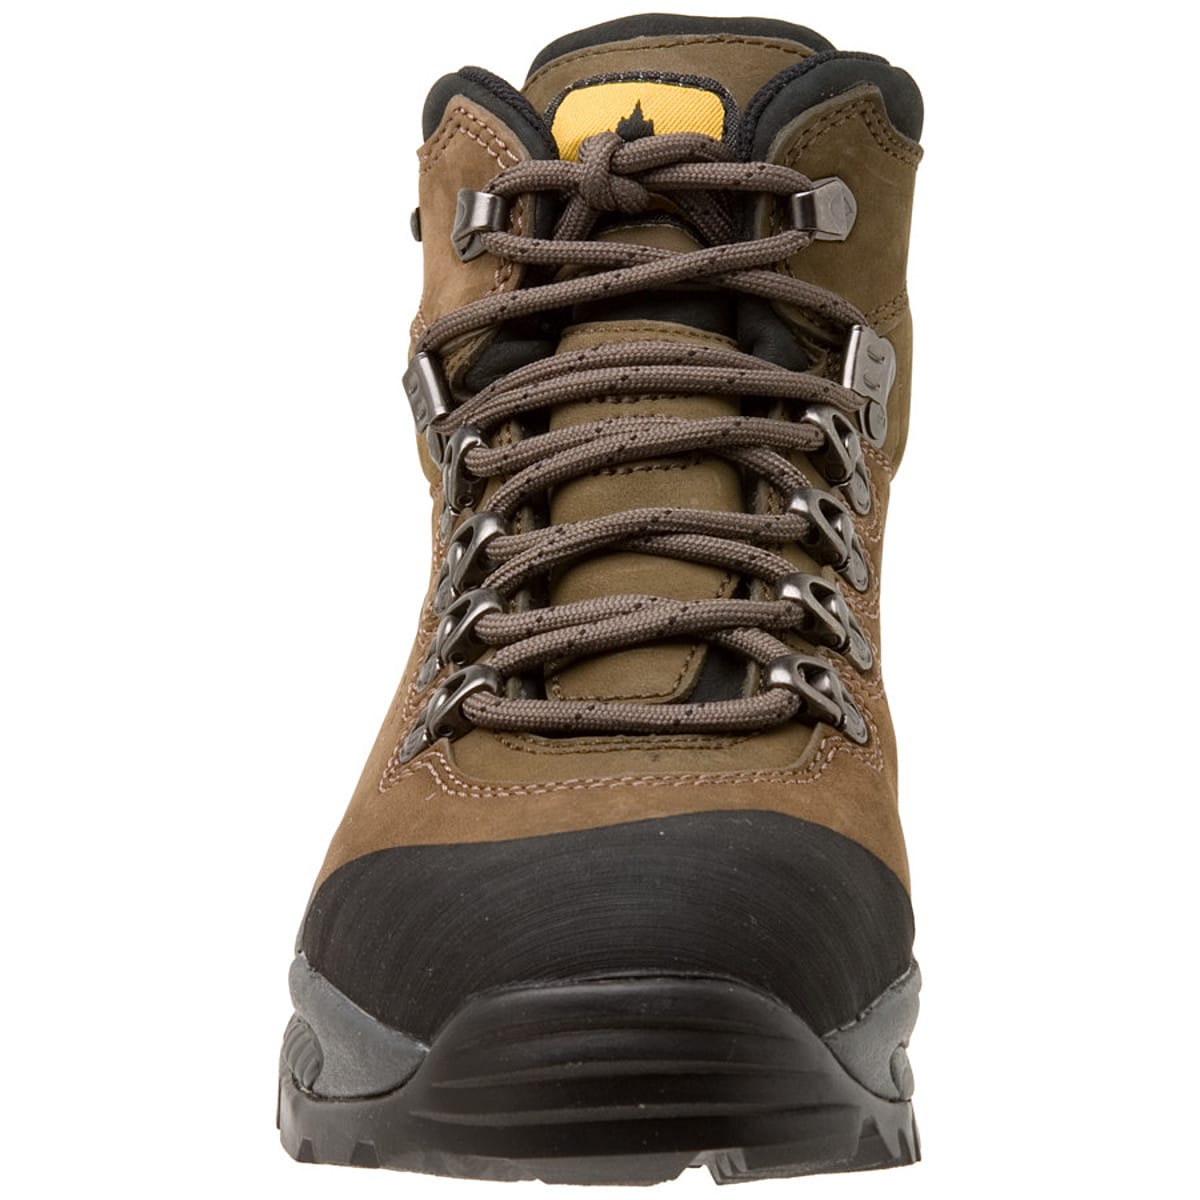 Vasque Wasatch GTX Hiking Boot - Women's - Footwear